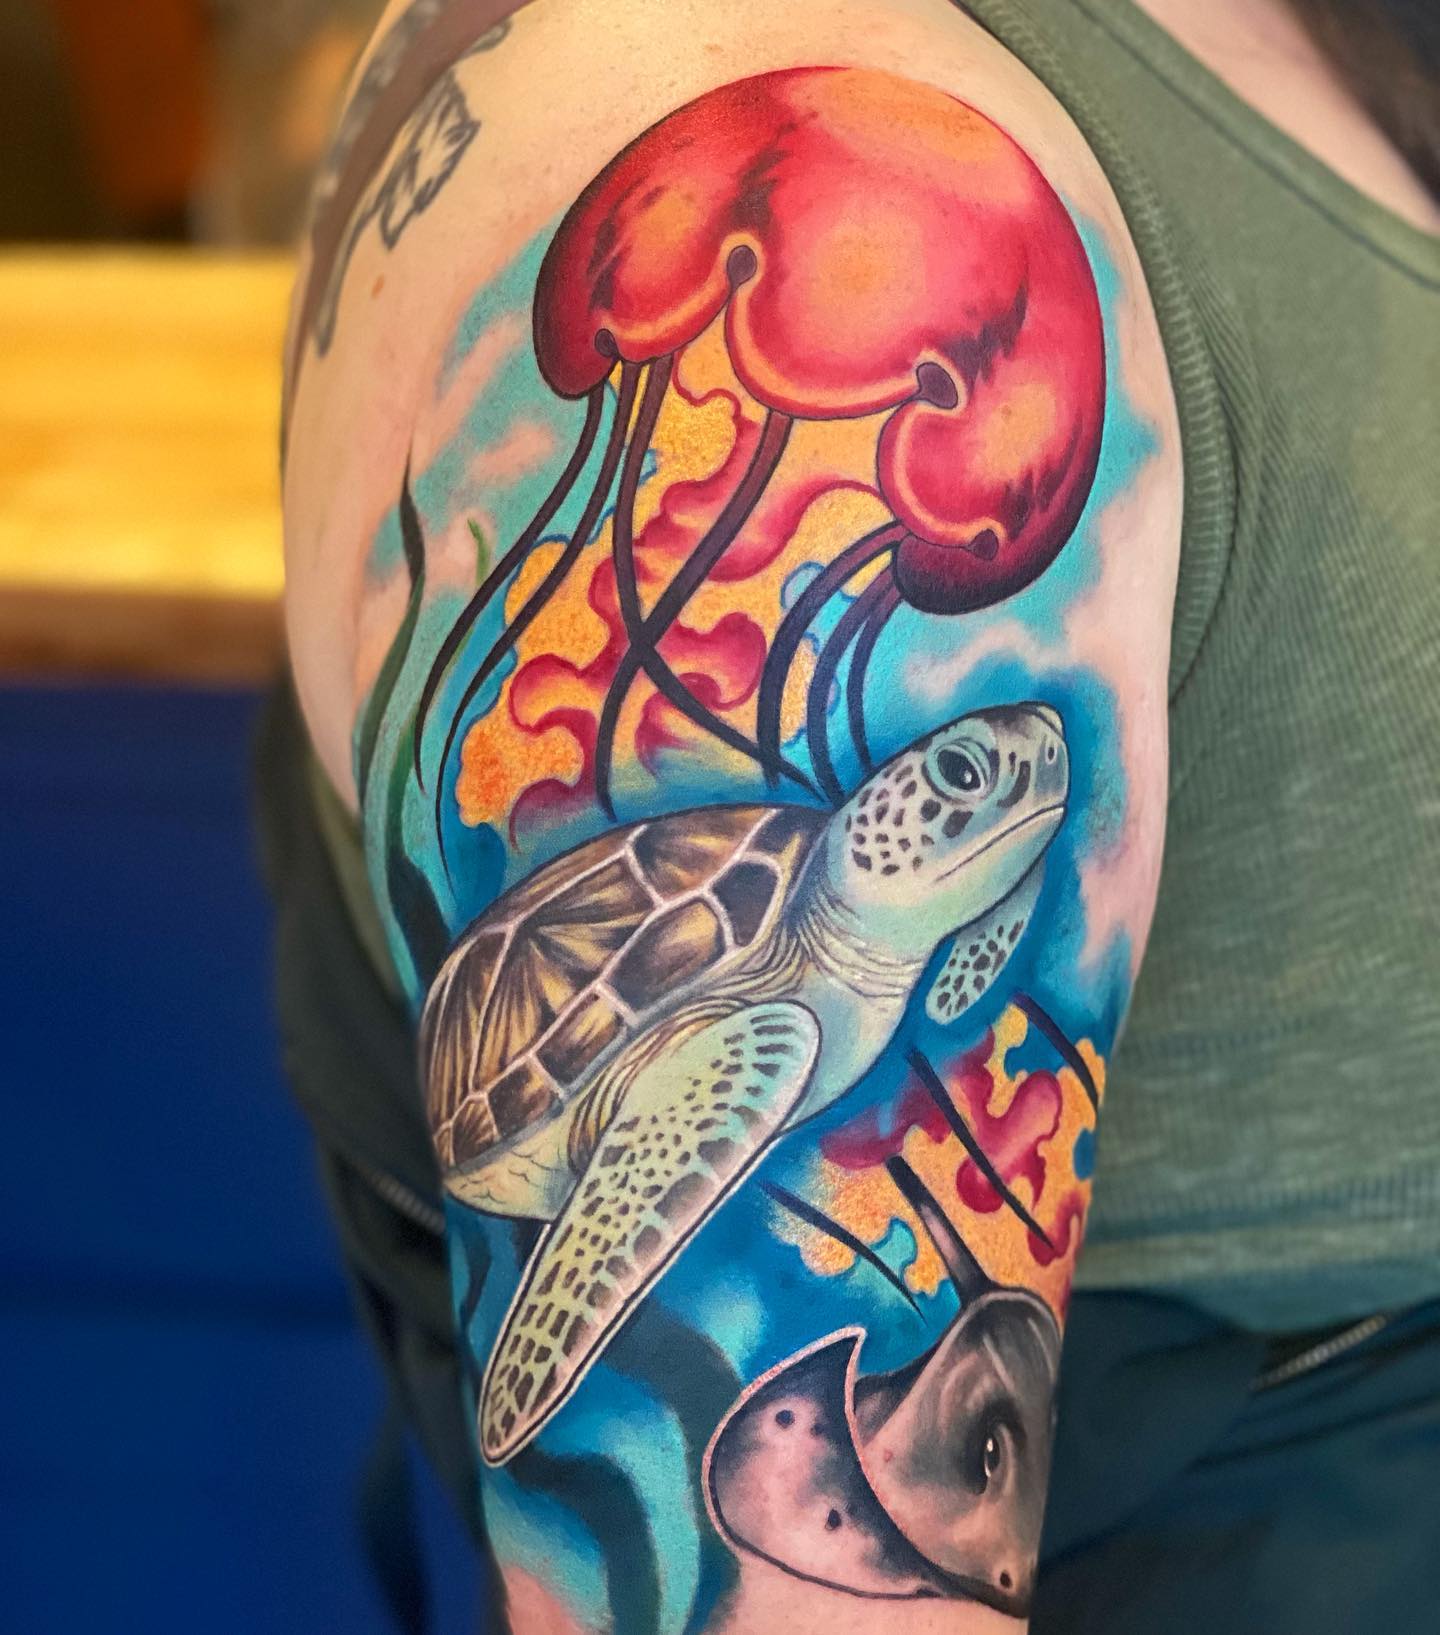 Tatuaje de tortuga marina y medusa coloridos.